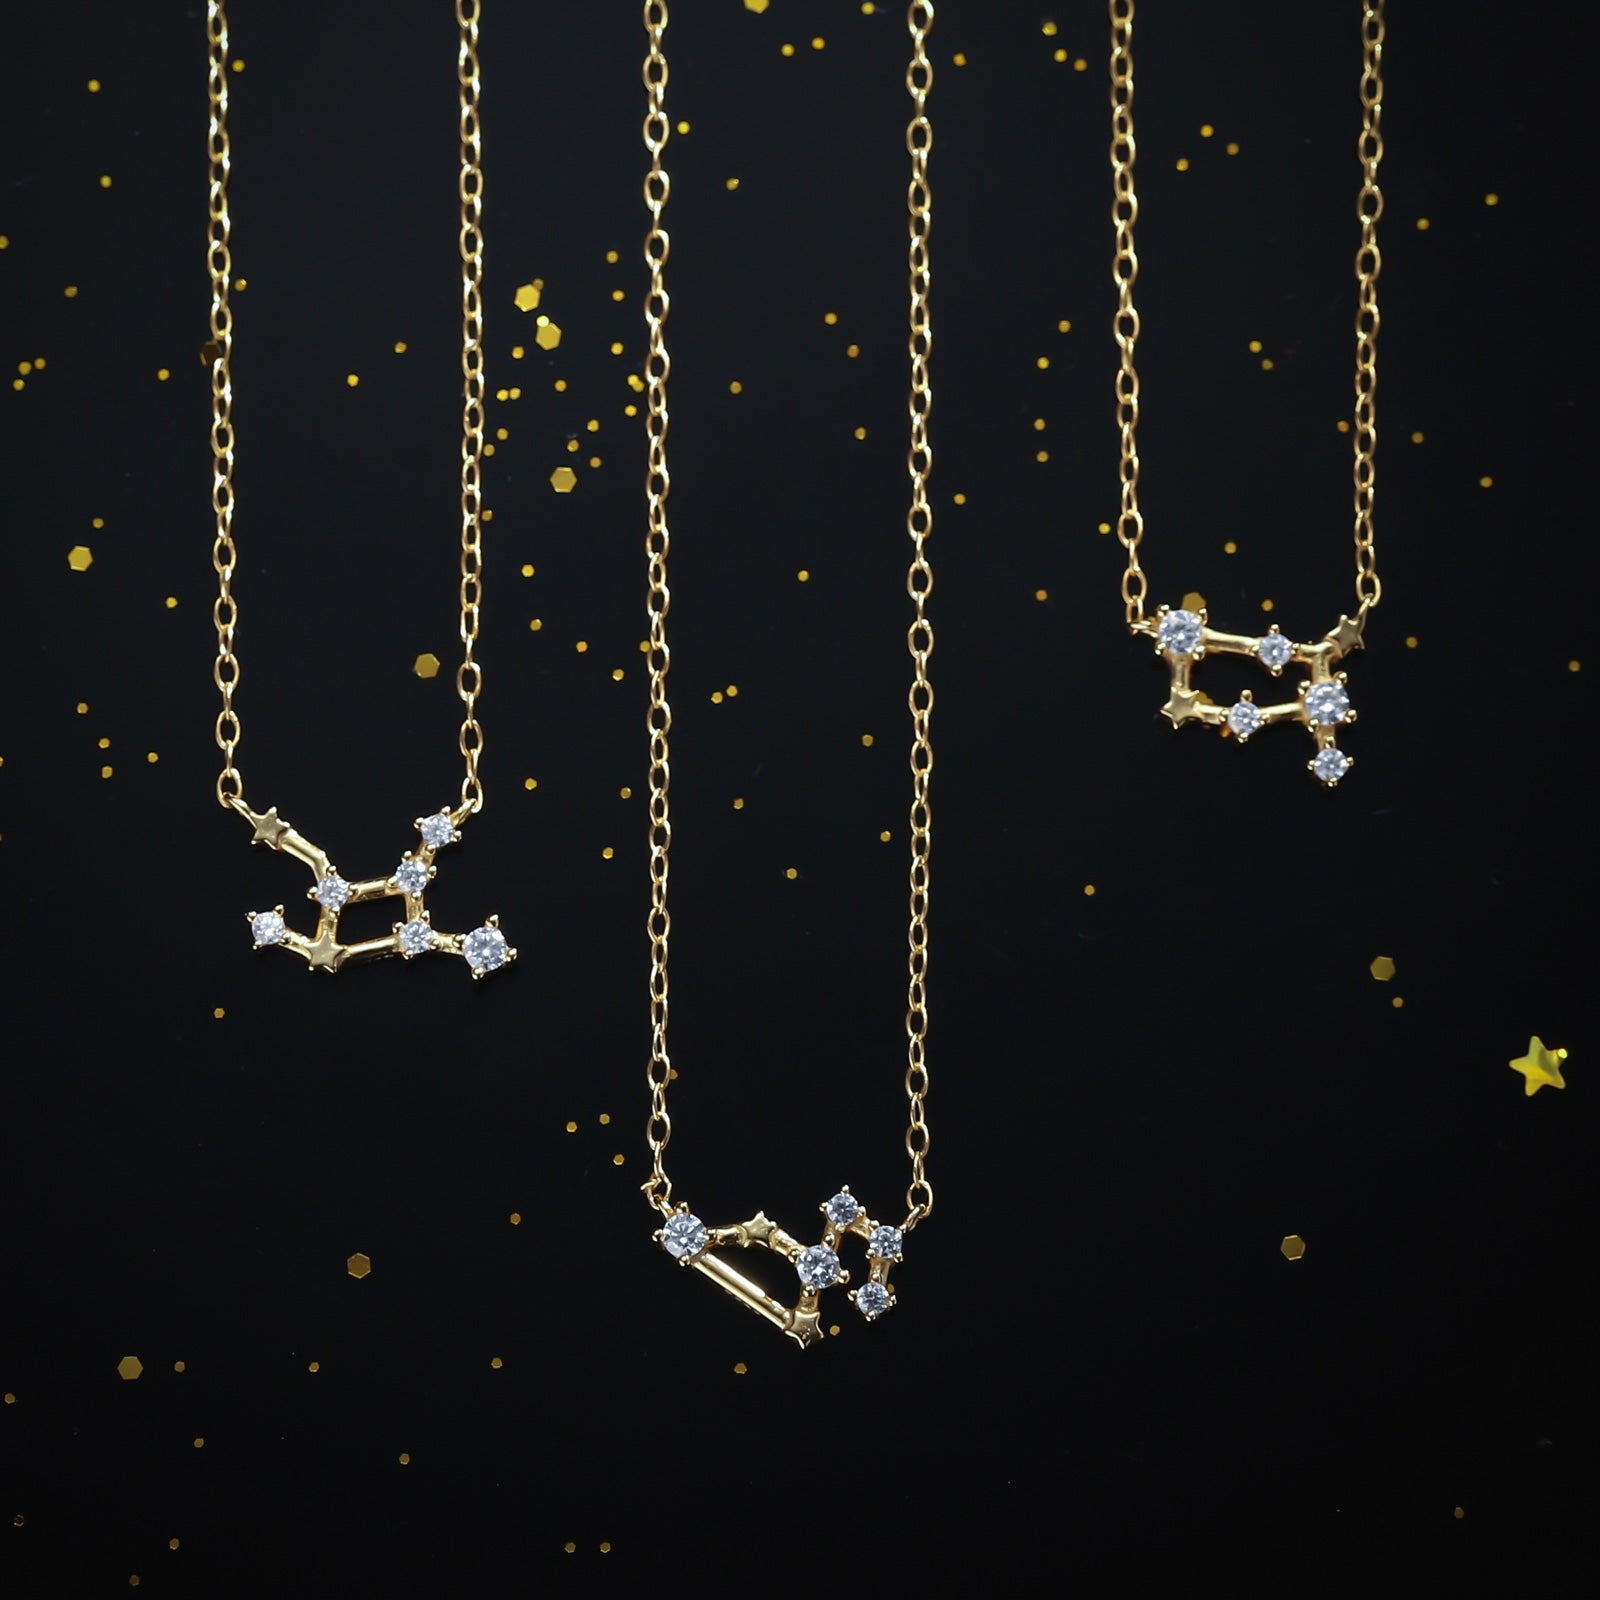 Silver Virgo Constellation Necklace Set